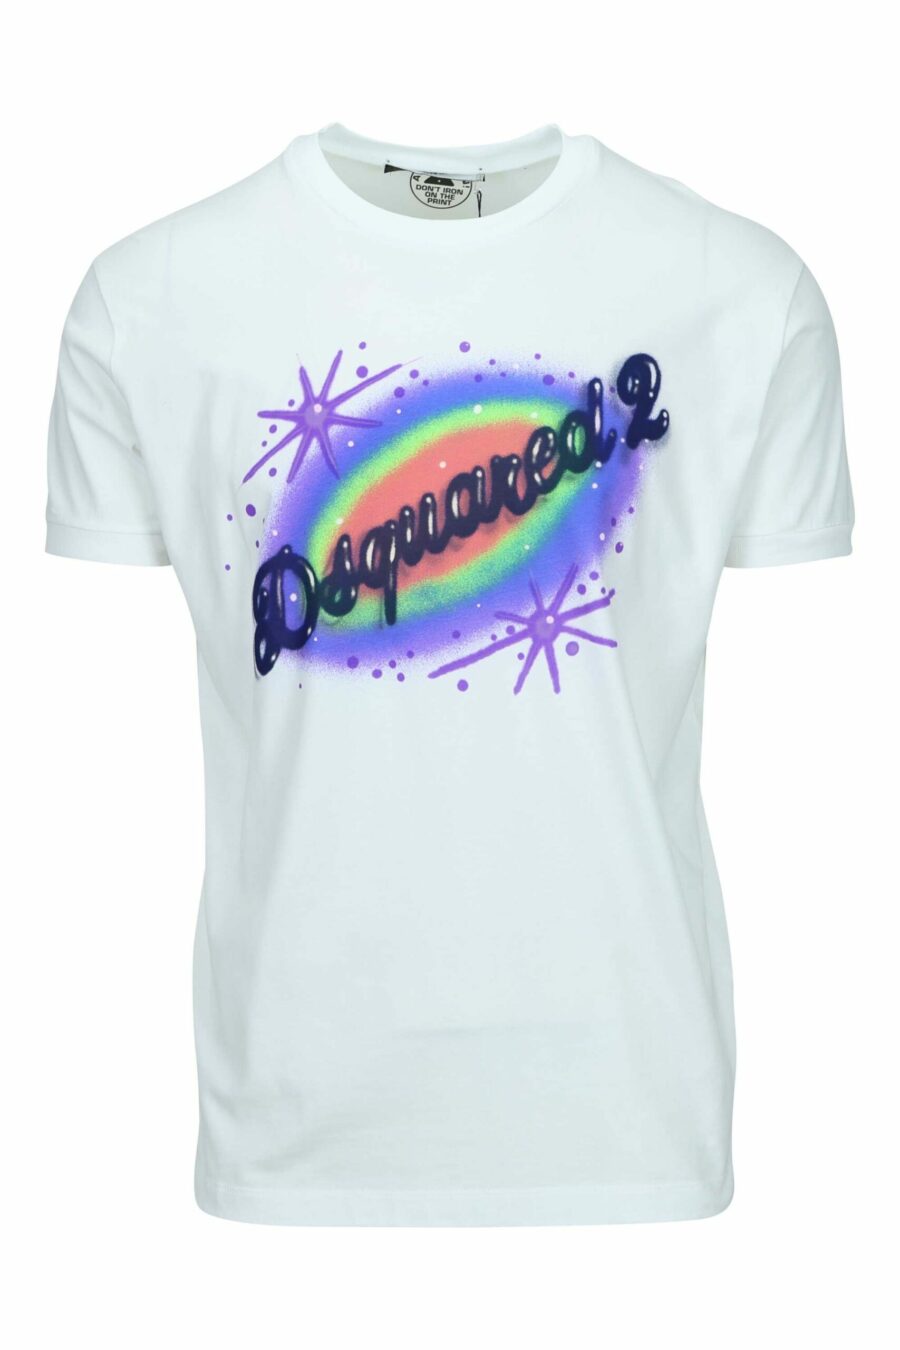 White T-shirt with multicoloured graffiti maxilogo - 8054148570620 scaled